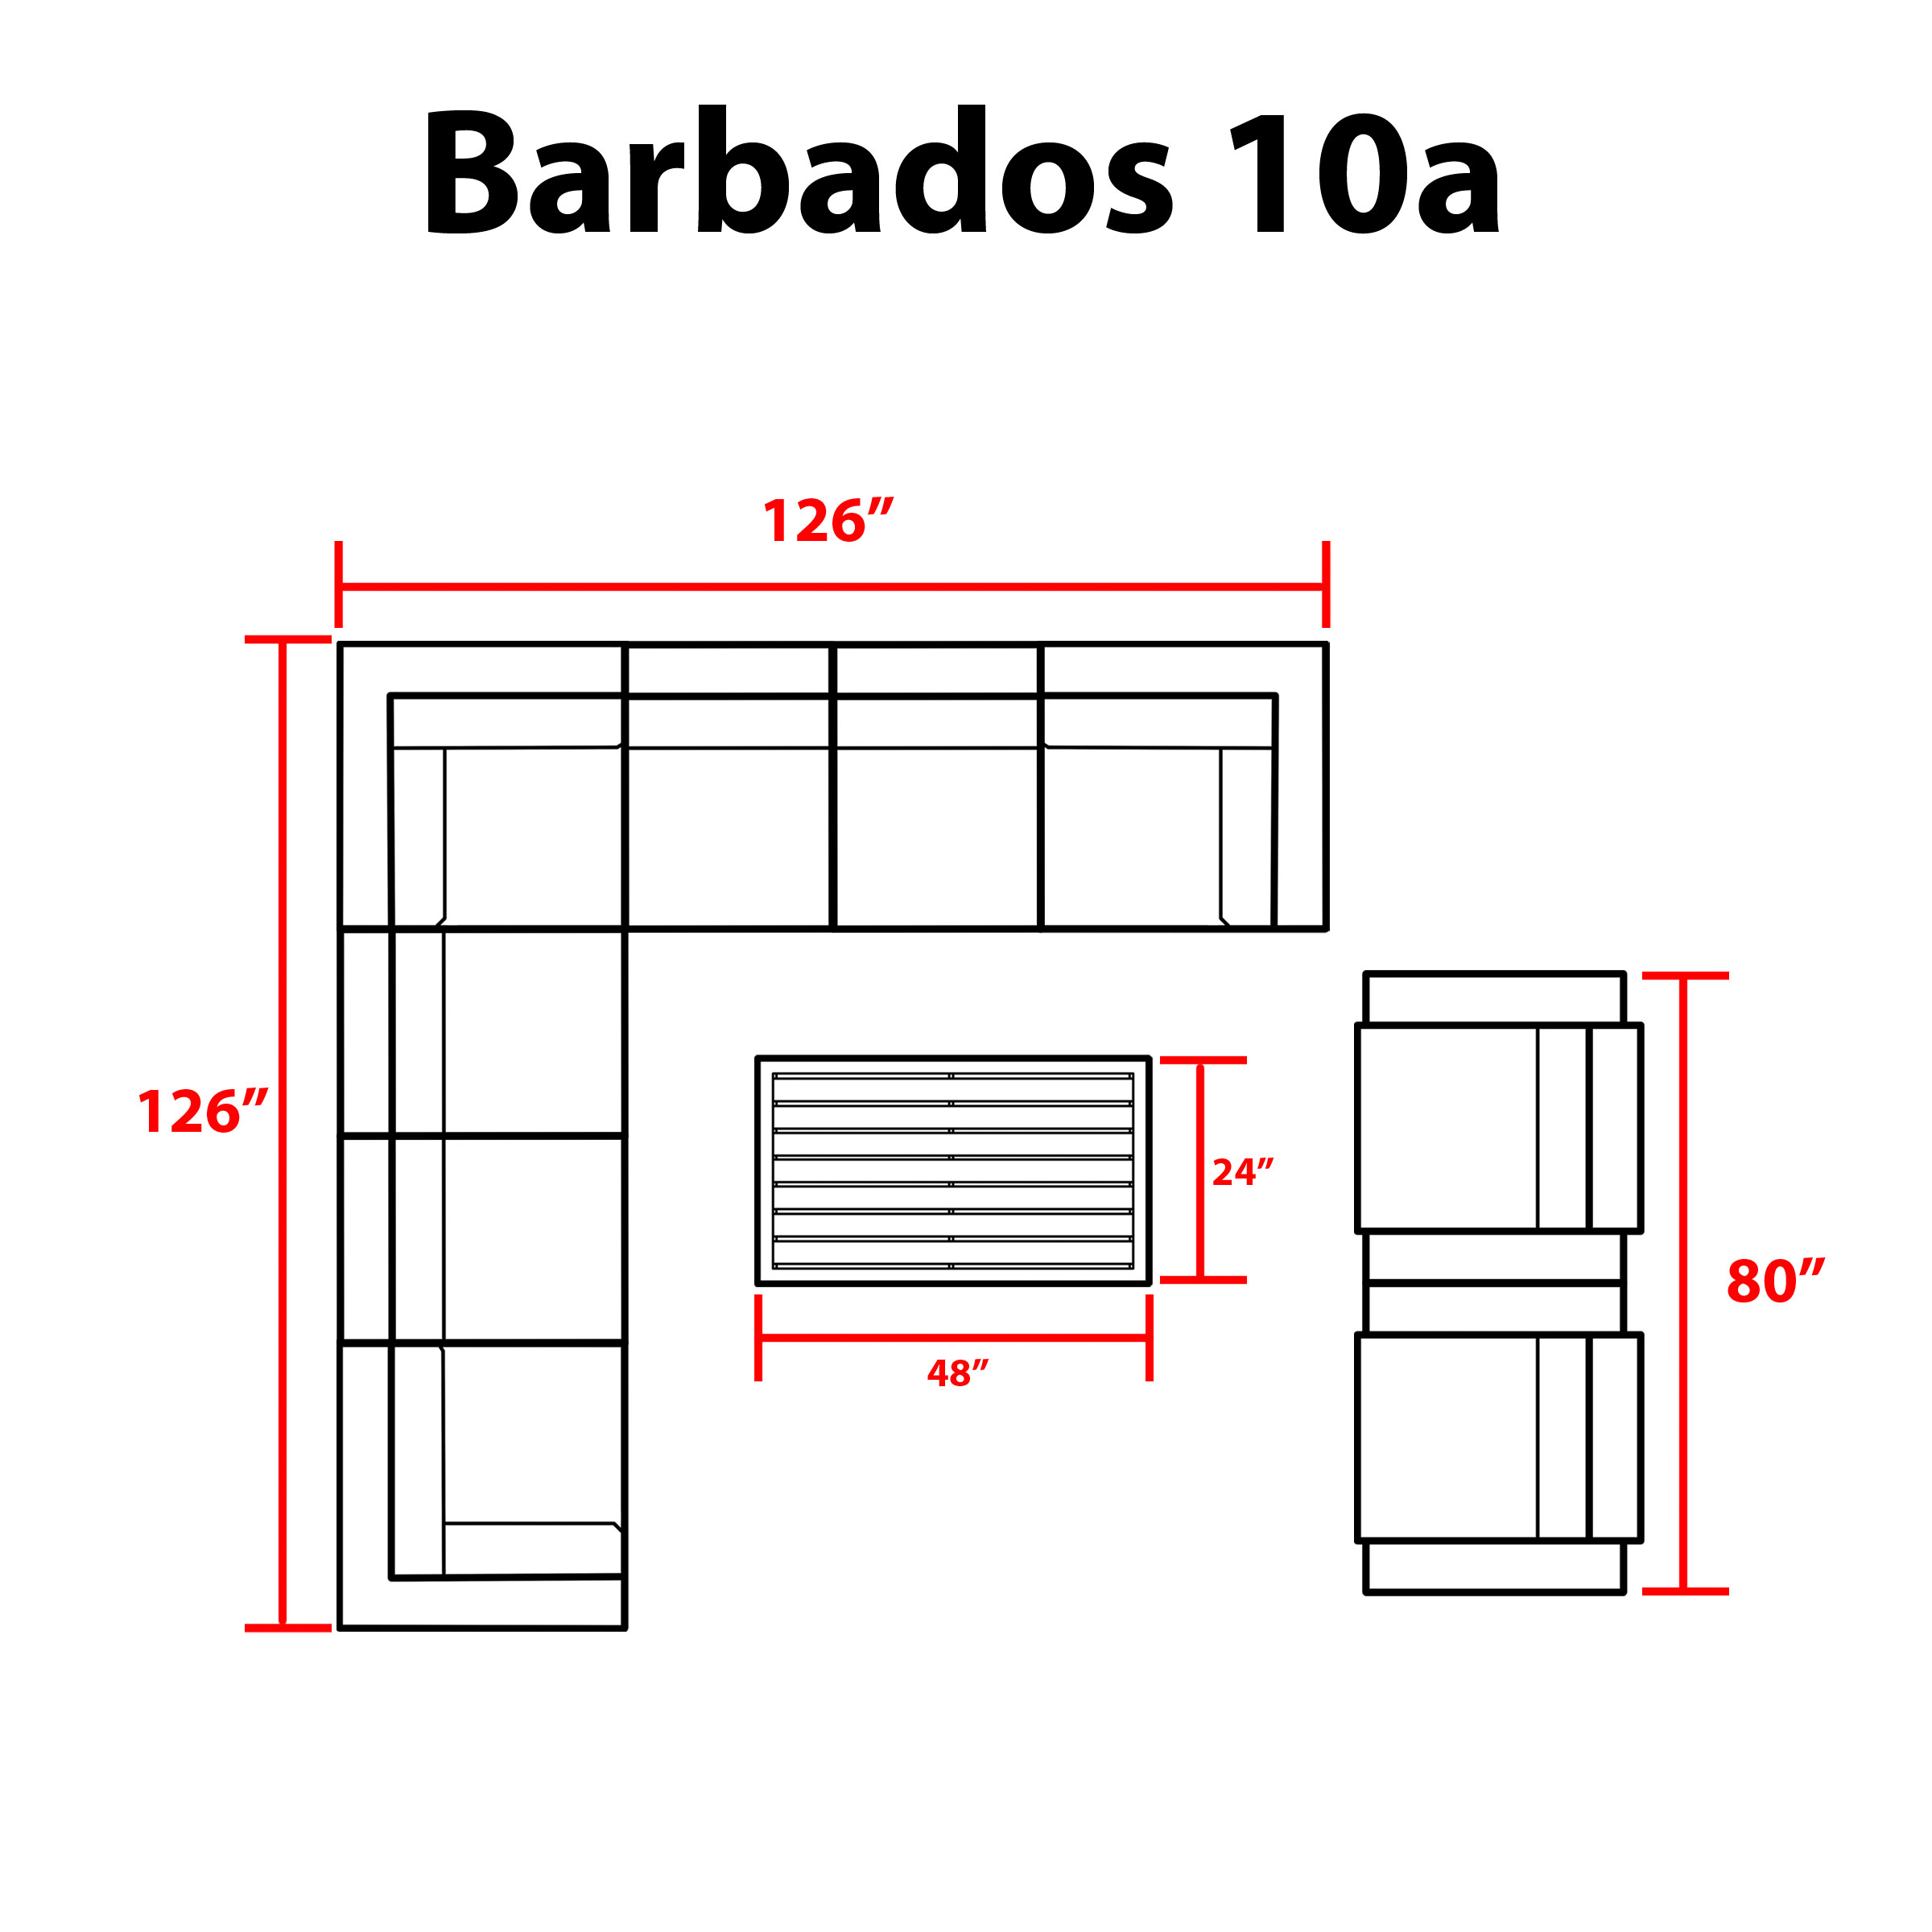 Barbados 10 Piece Outdoor Wicker Patio Furniture Set 10a - TK Classics